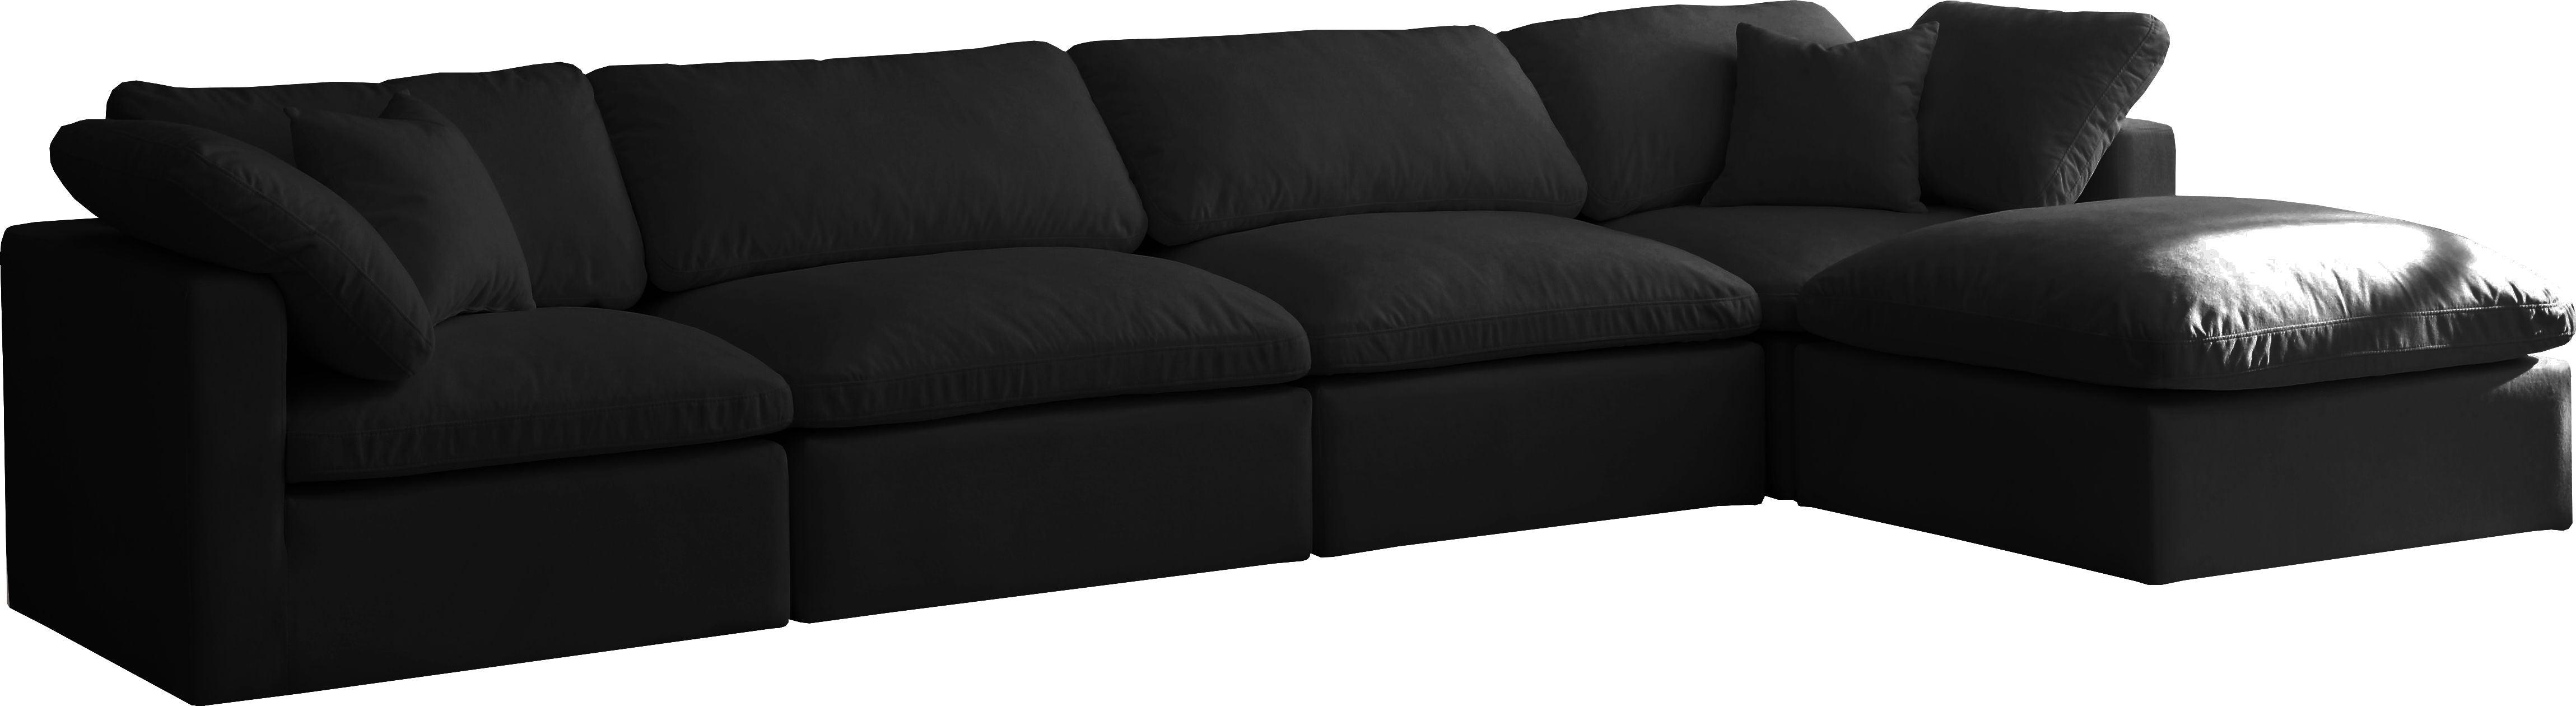 Meridian Furniture - Plush - Velvet Standart Comfort Modular Sectional 5 Piece - Black - Fabric - 5th Avenue Furniture